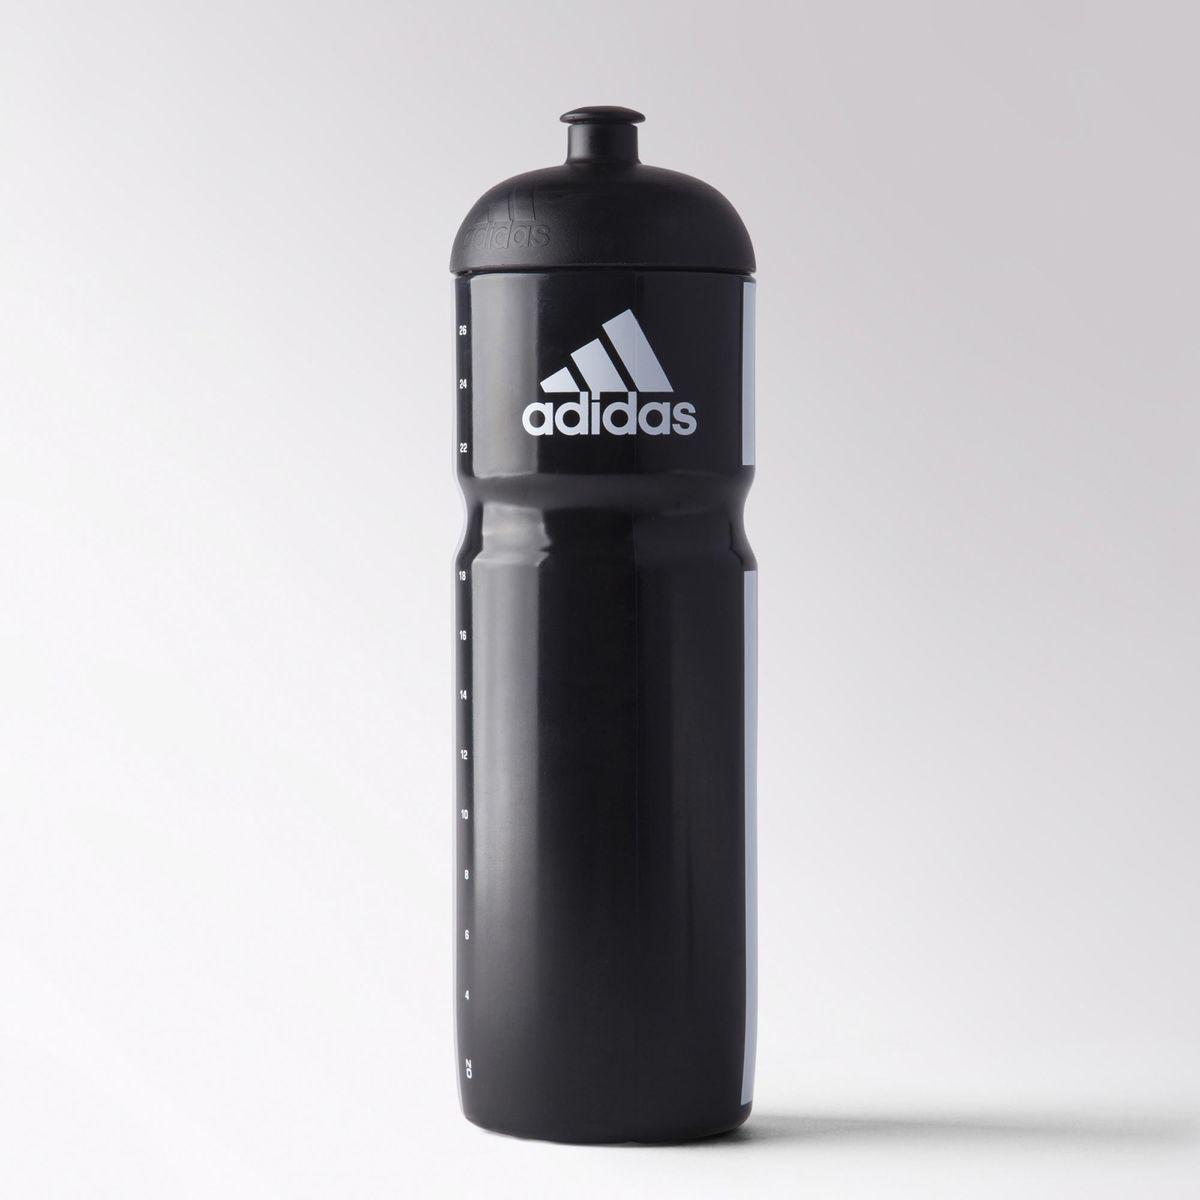 Adidas Classic 750ml Water Bottle Black